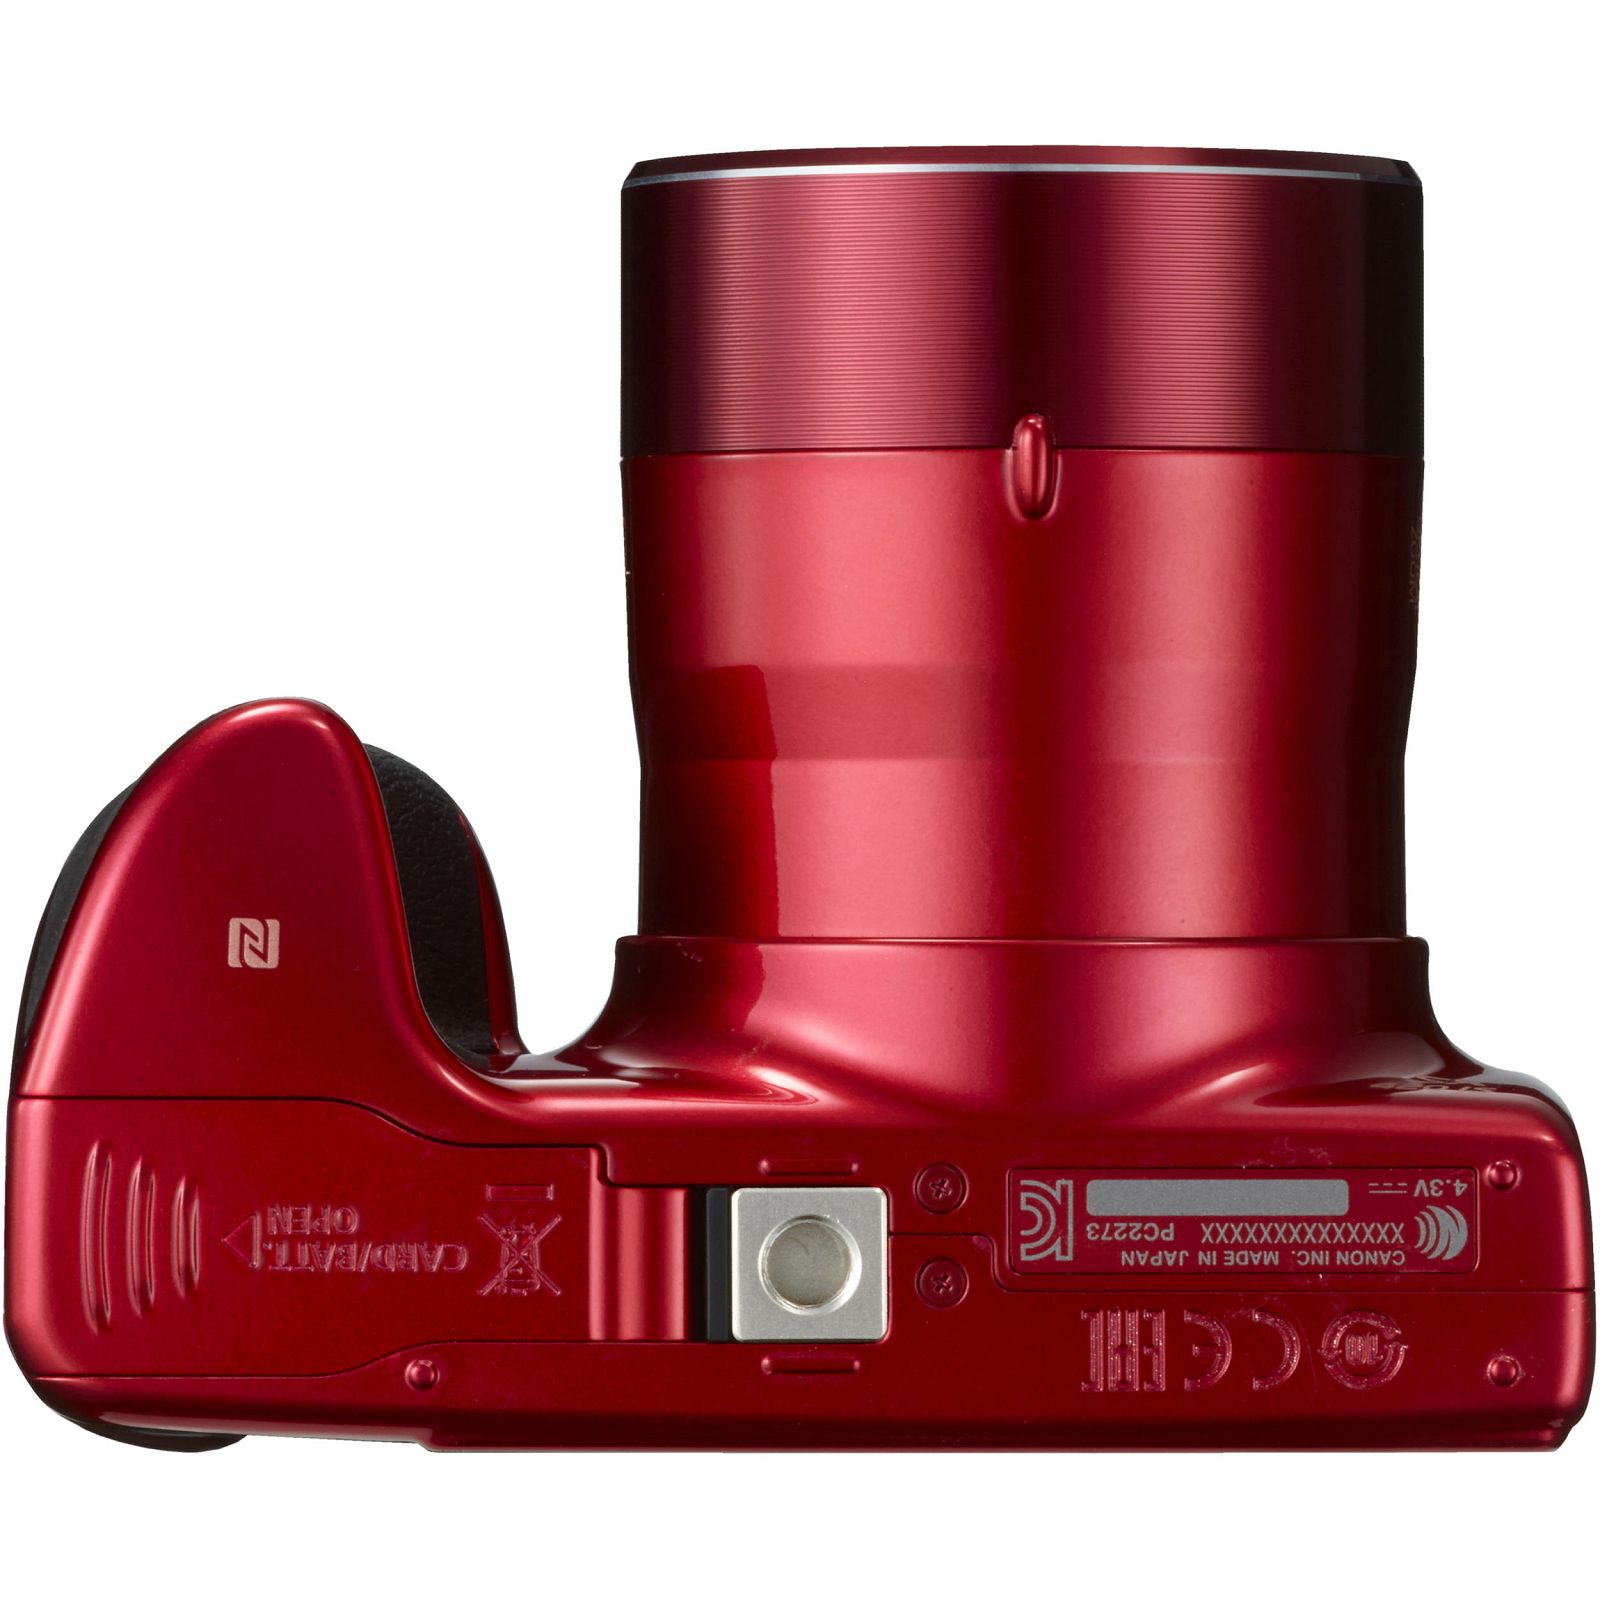 Canon Powershot SX420IS Red EU23 1069C002AA SX420 IS crveni digitalni fotoaparat